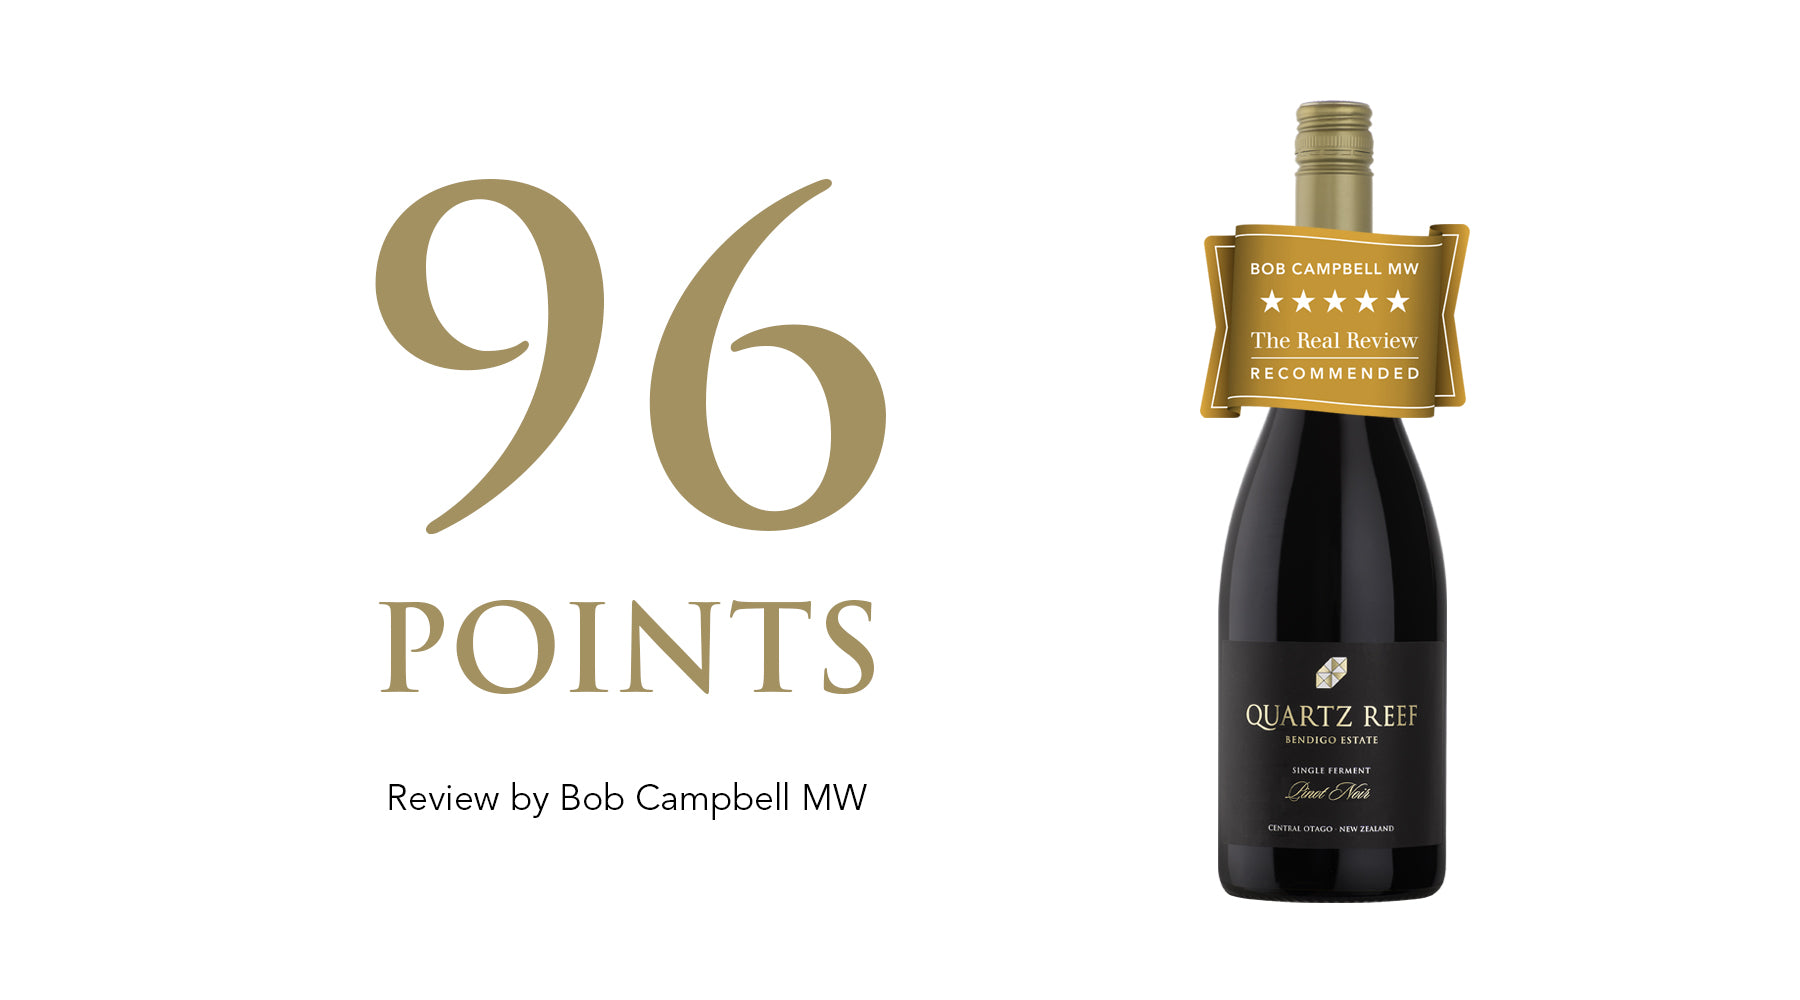 Bendigo Estate Pinot Noir 2017: Awarded 96 points and 5 Stars